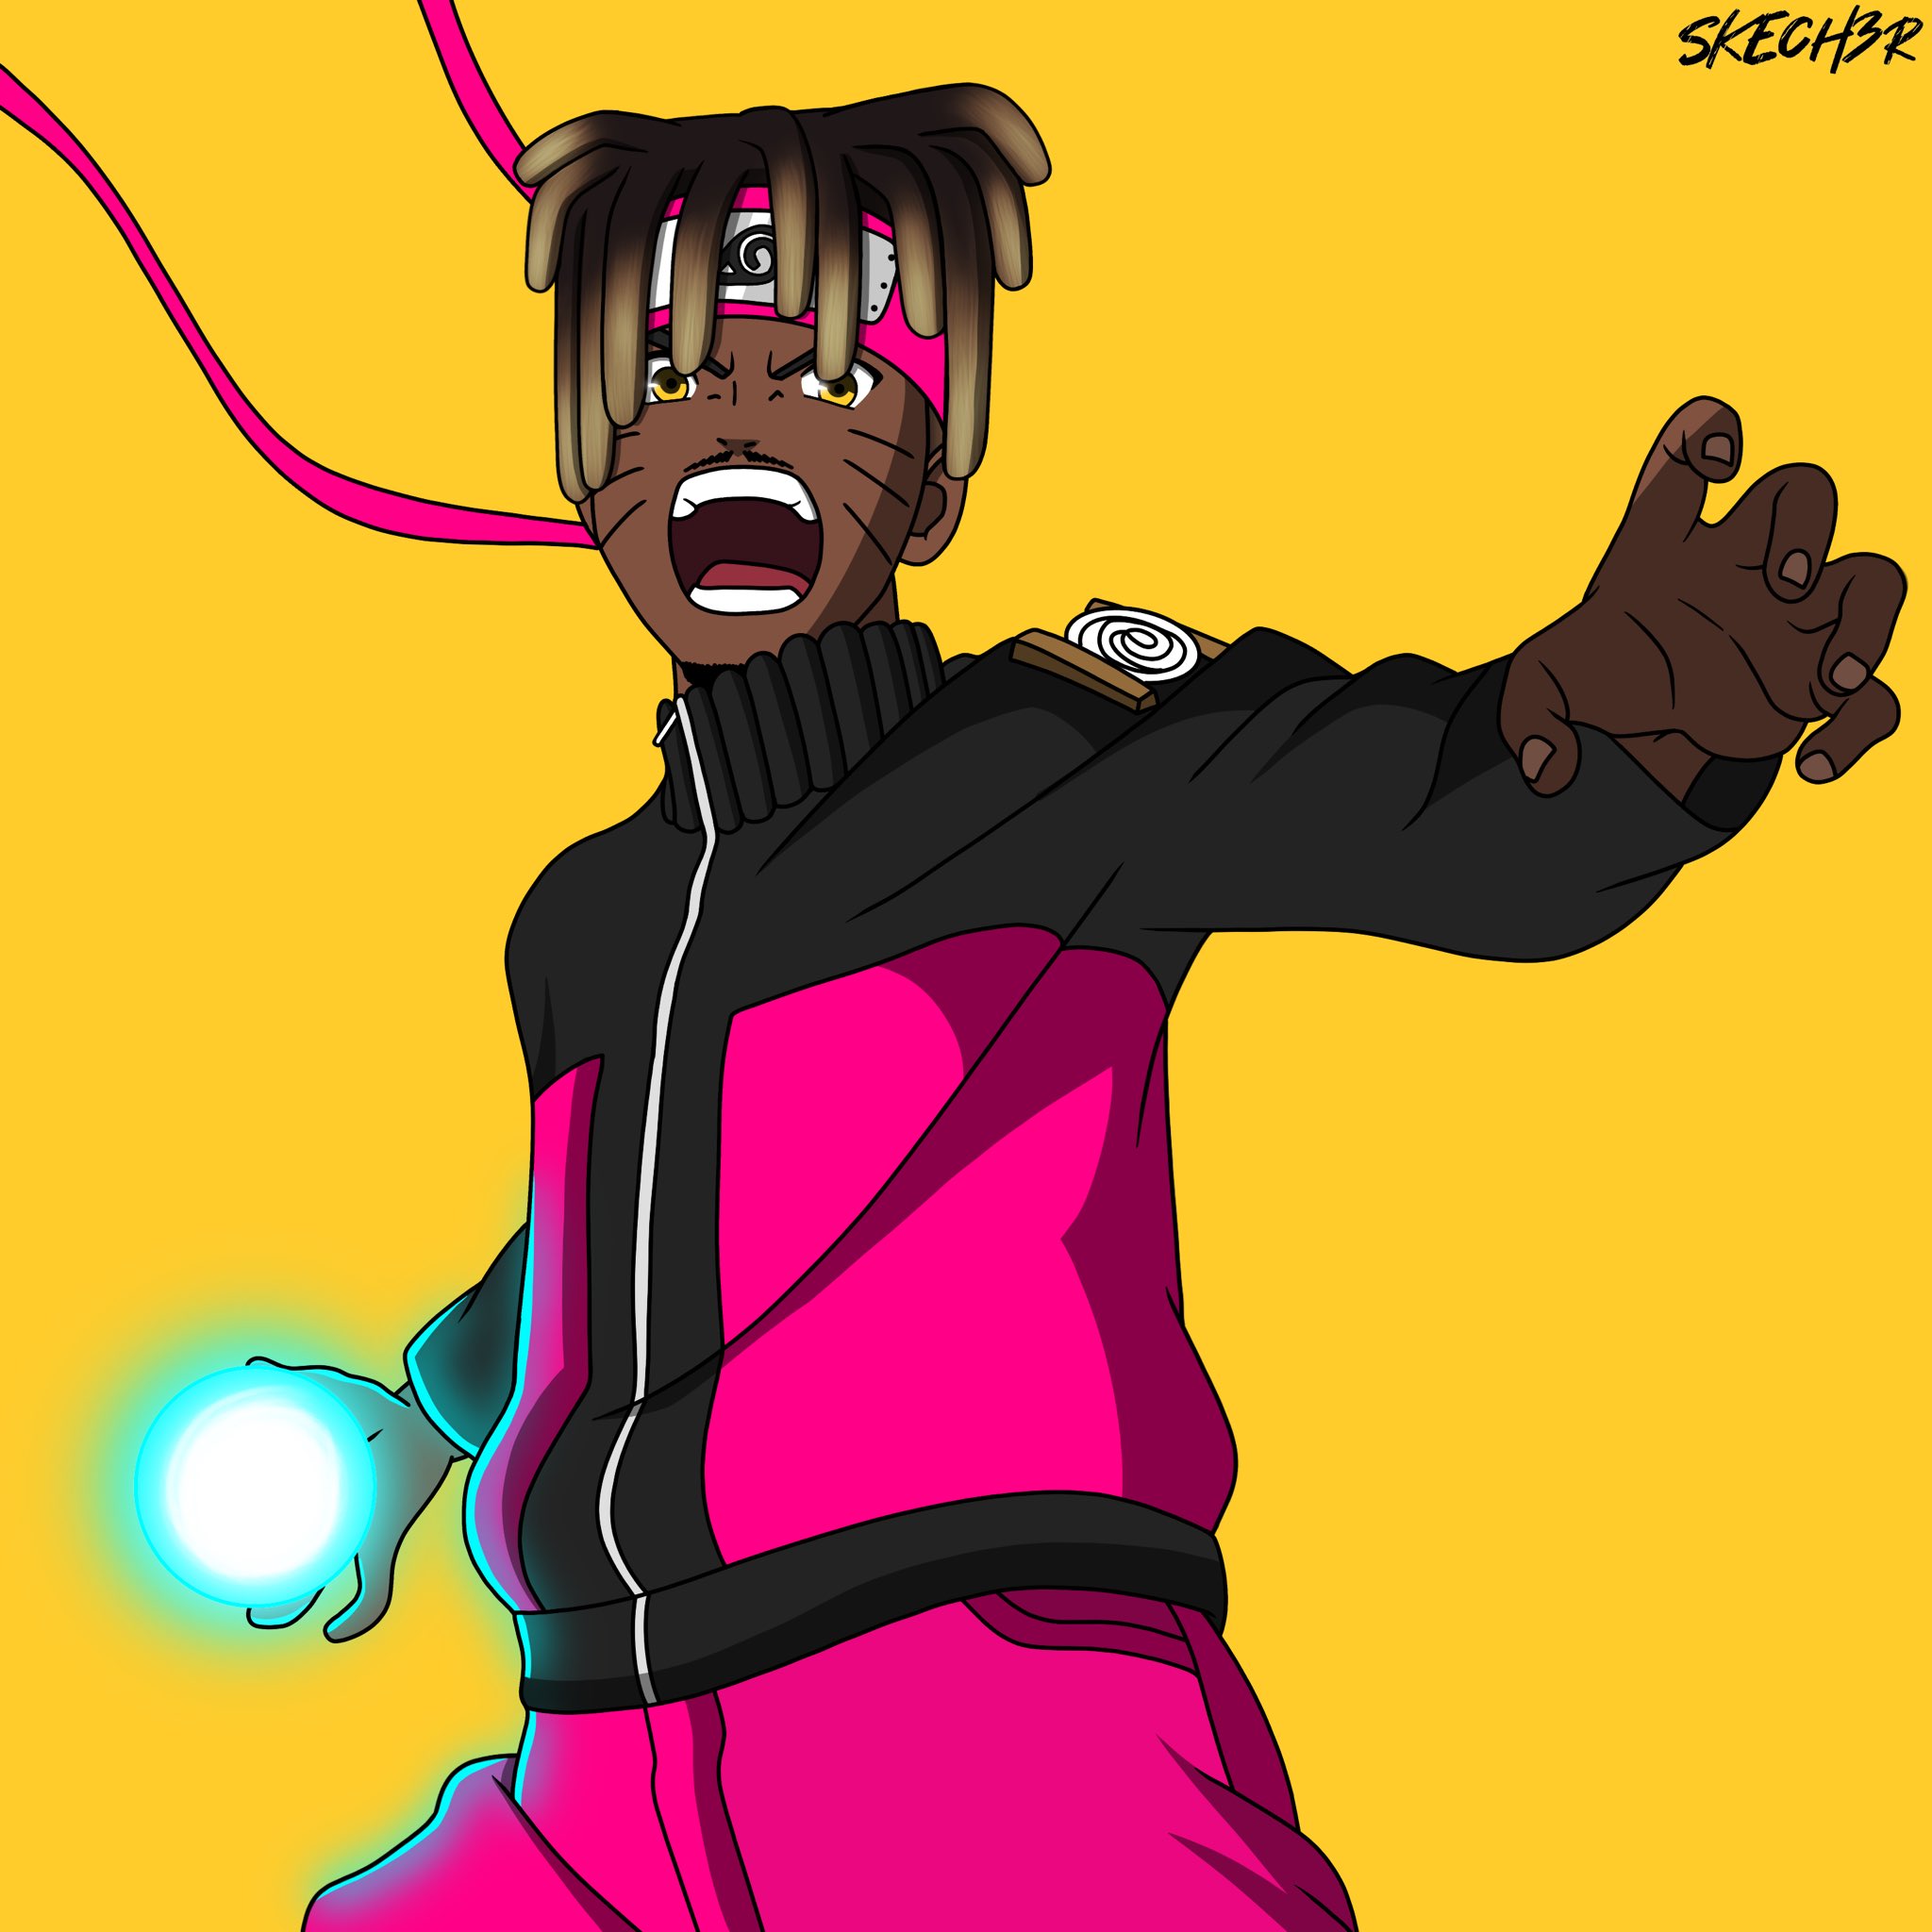 SKECH3R on Twitter Juicewrld as kakashi PortfolioDay art anime  GraphicDesign coverart rap liluzi anime animeart  httpstcofdMzDwNWTY  Twitter